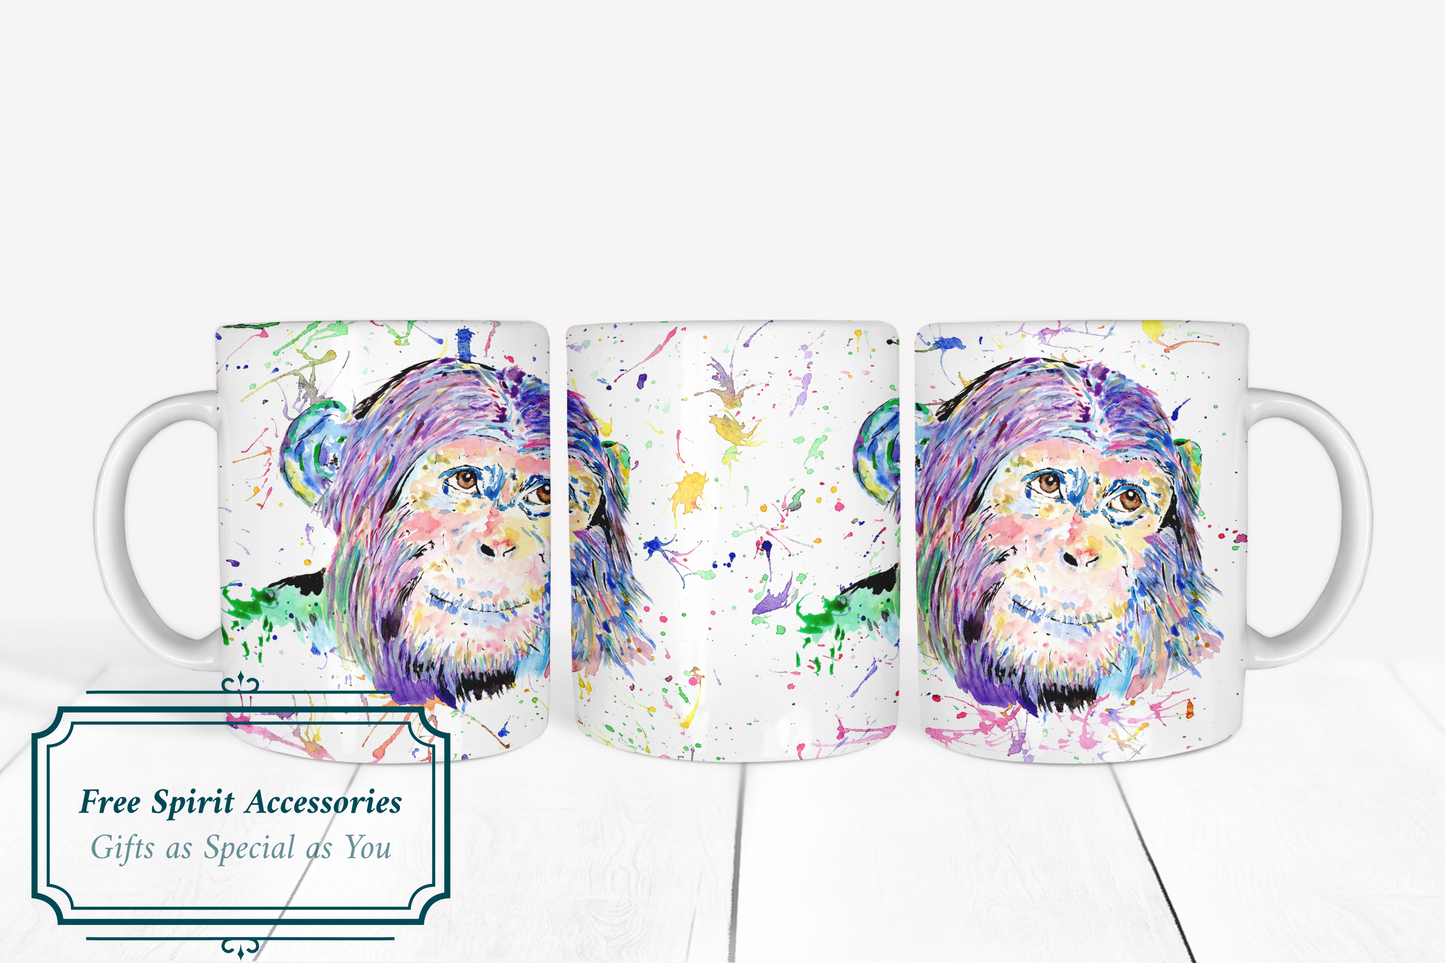  Rainbow Splashed Chimpanzee Coffee Mug by Free Spirit Accessories sold by Free Spirit Accessories